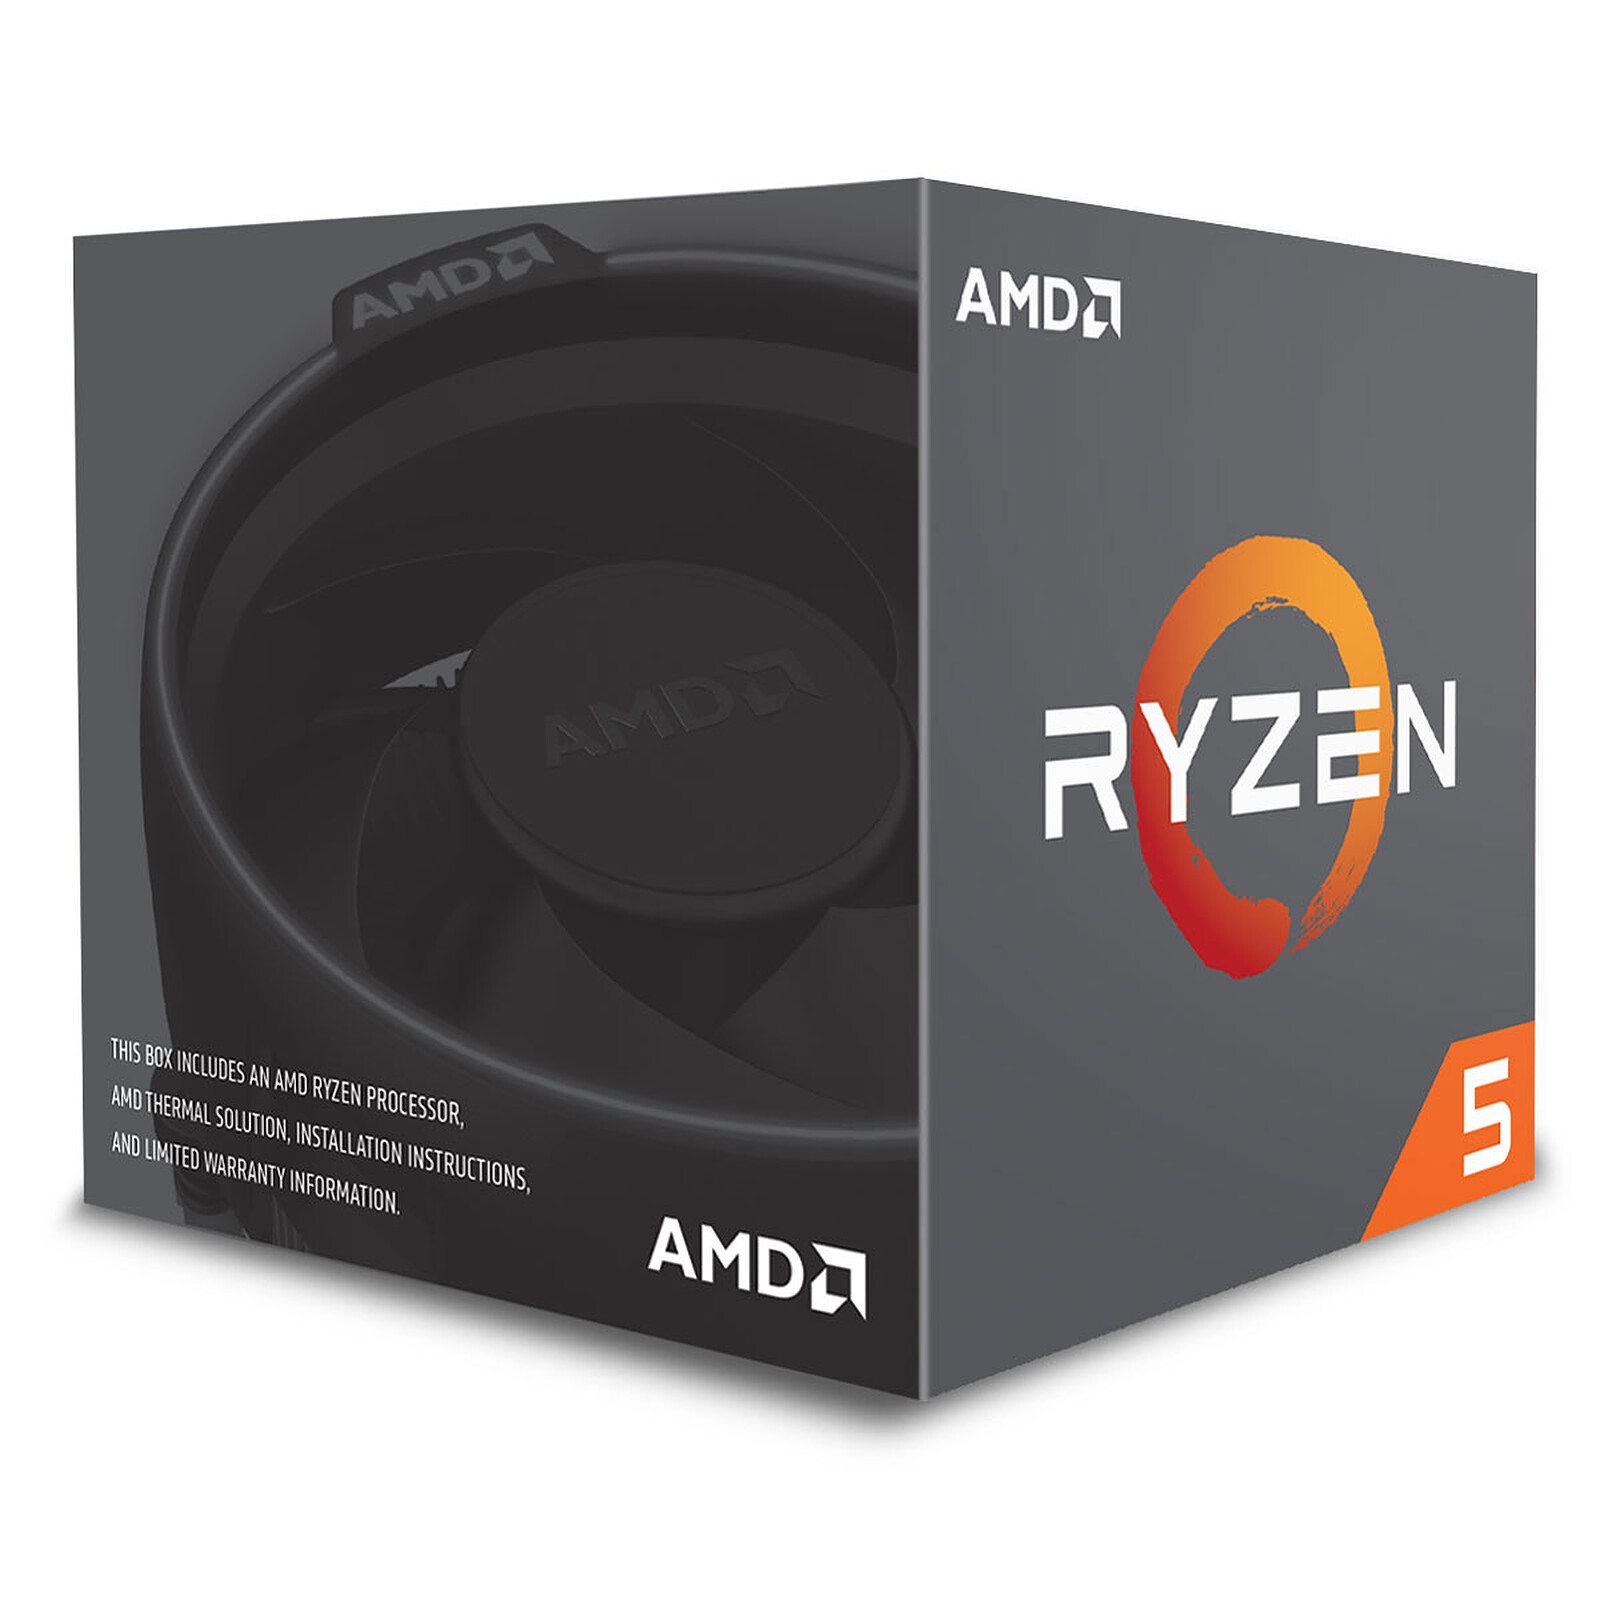 AMD Ryzen 5 2600 Wraith Stealth Edition (3.4 GHz) - Processor AMD on LDLC |  Holy Moley